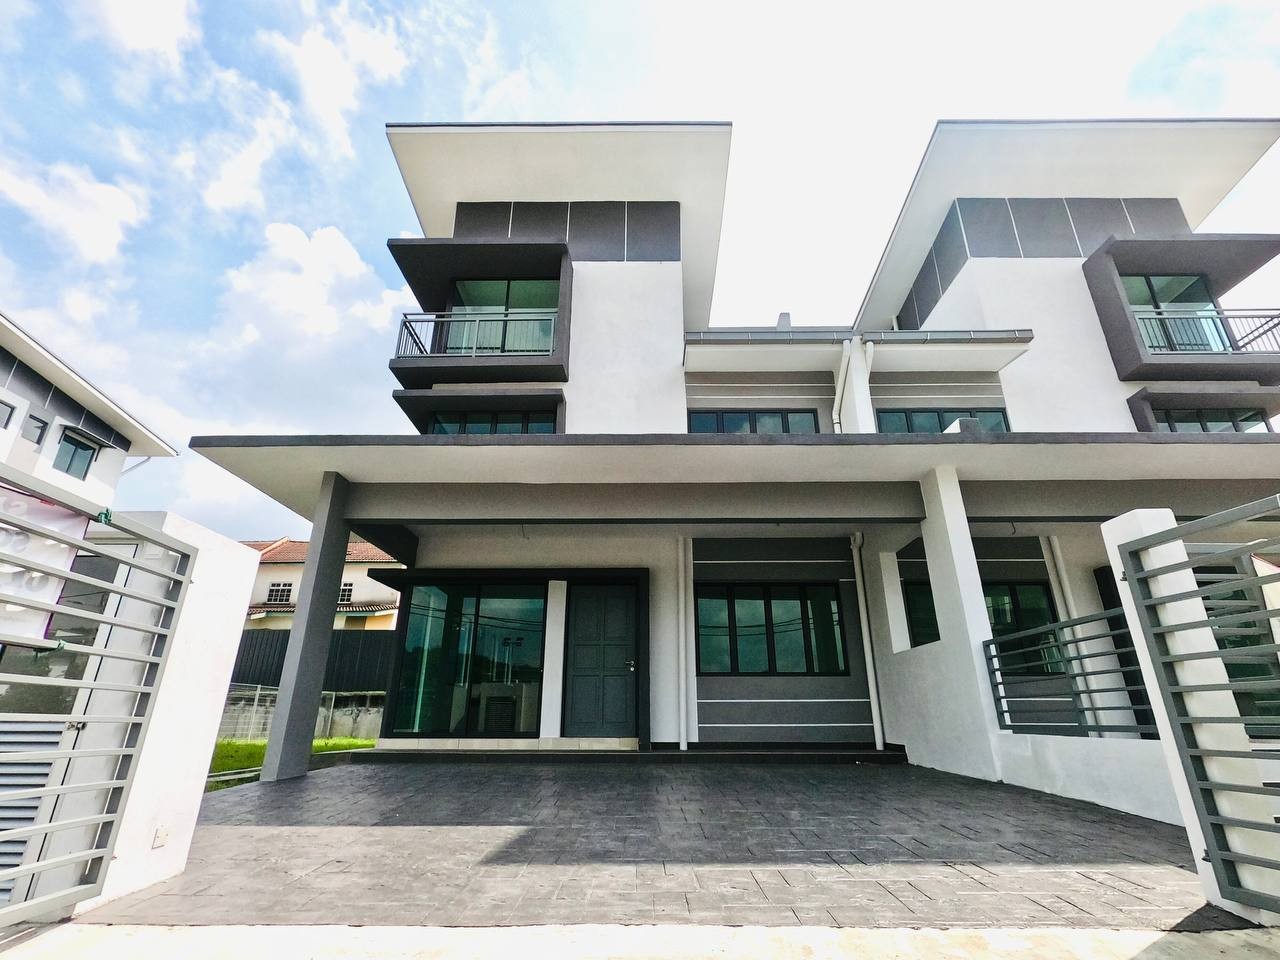 BRAND NEW, FACING OPEN 3 Storey Semi-d House Taman Sentosa Damai Teras Jernang Kajang Selangor Near Bandar Baru Bangi